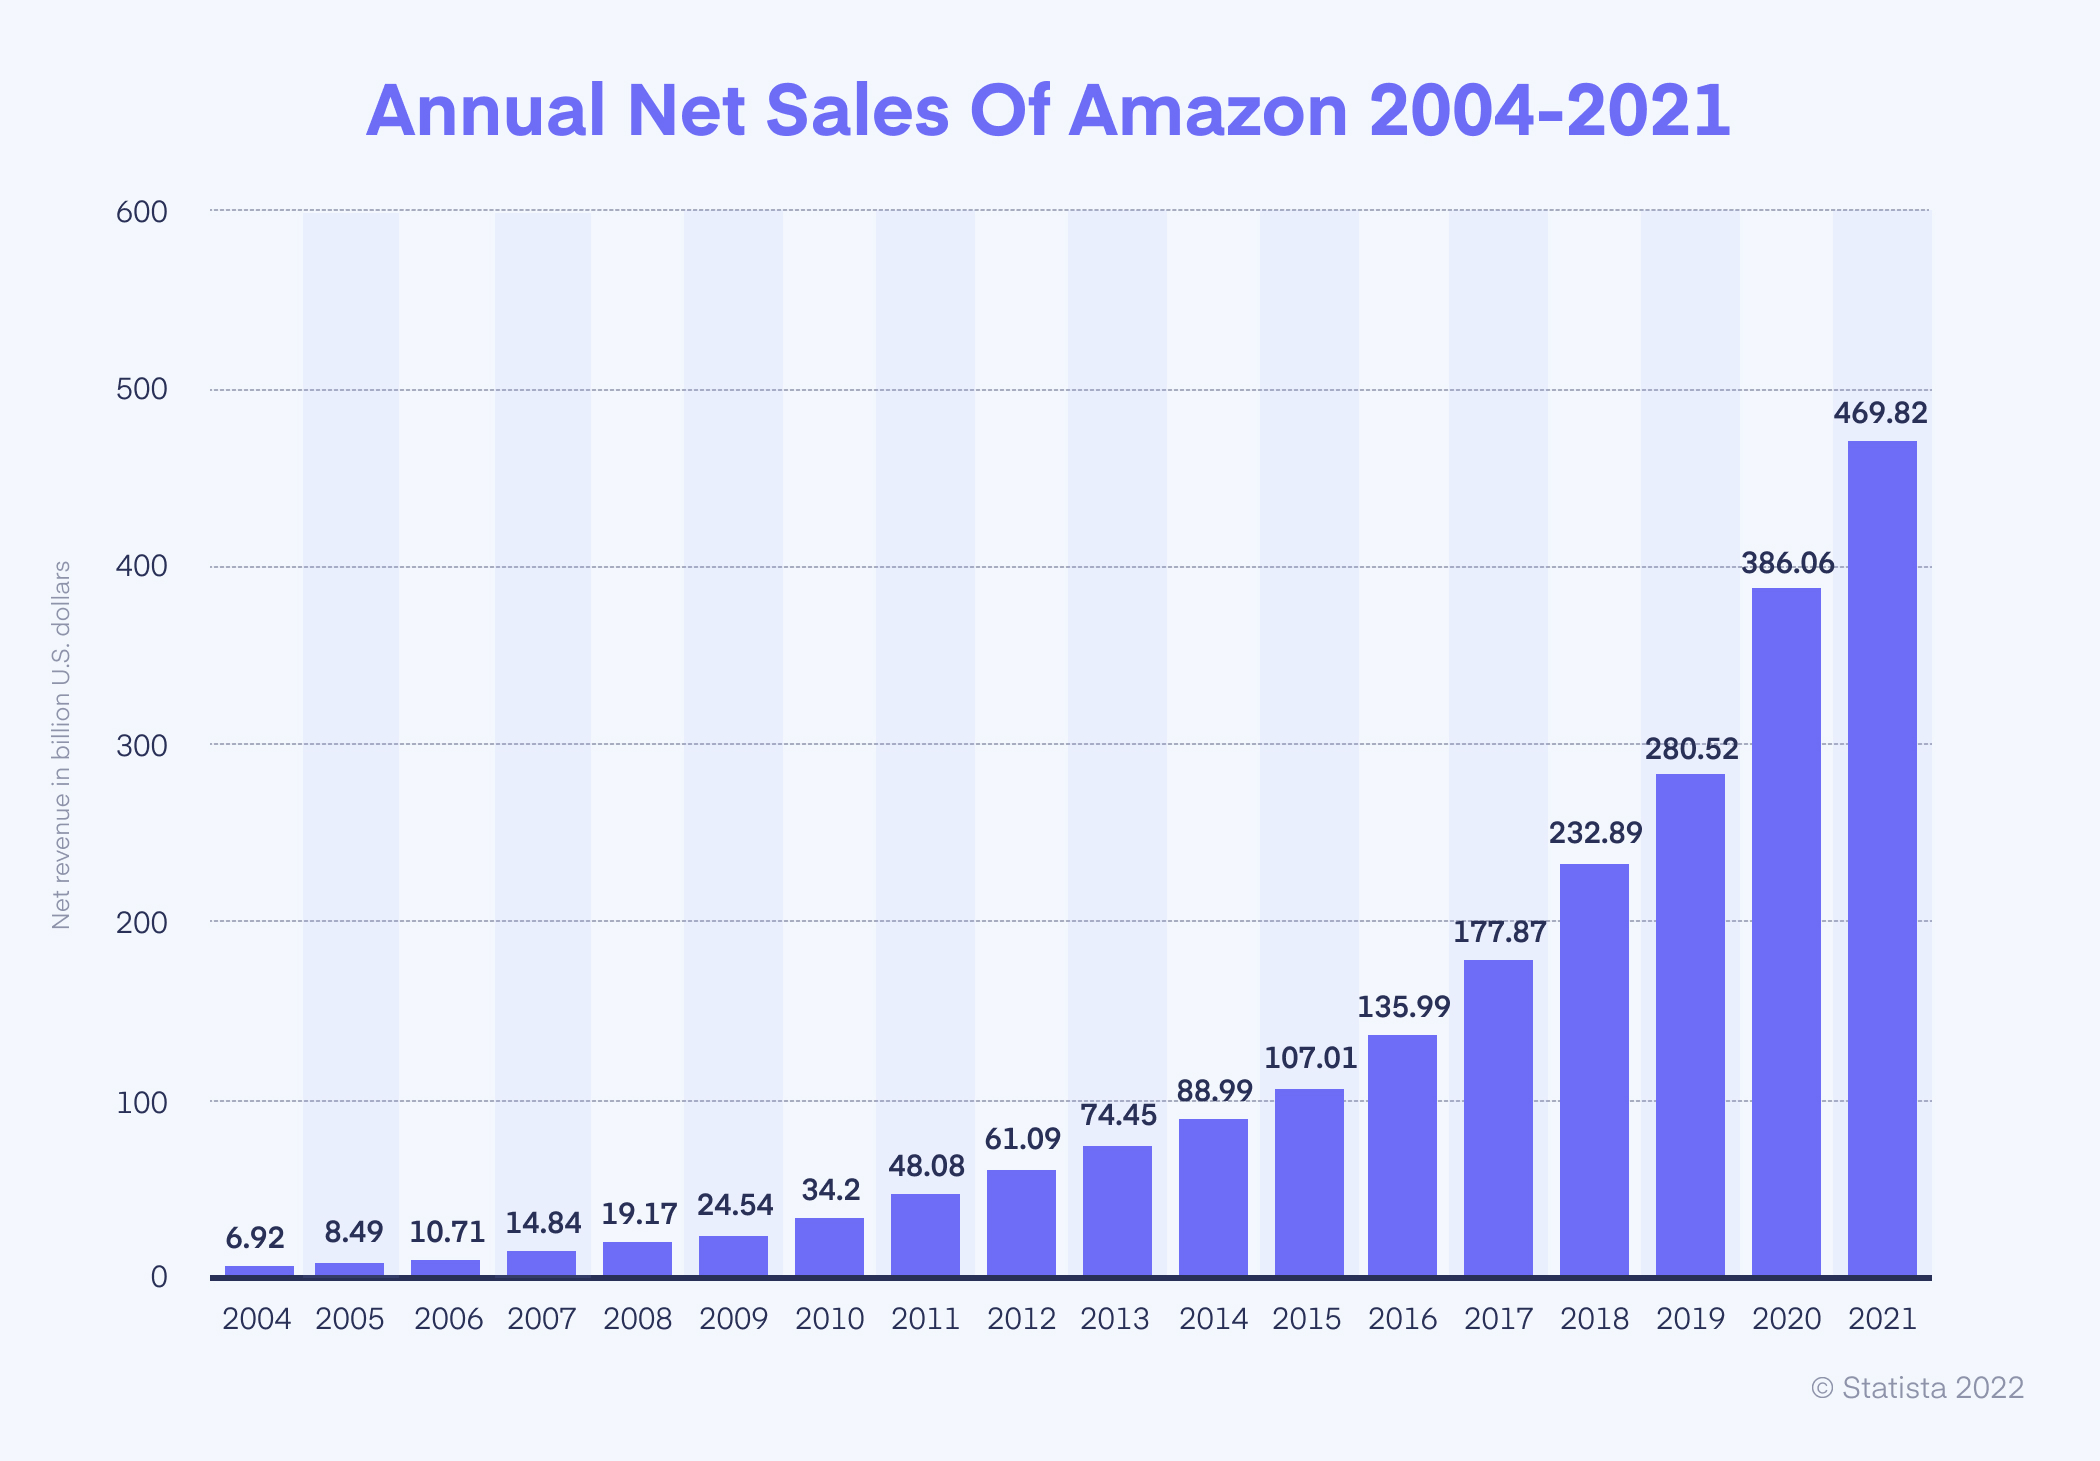 Annual Net Sales of Amazon 2004-2021